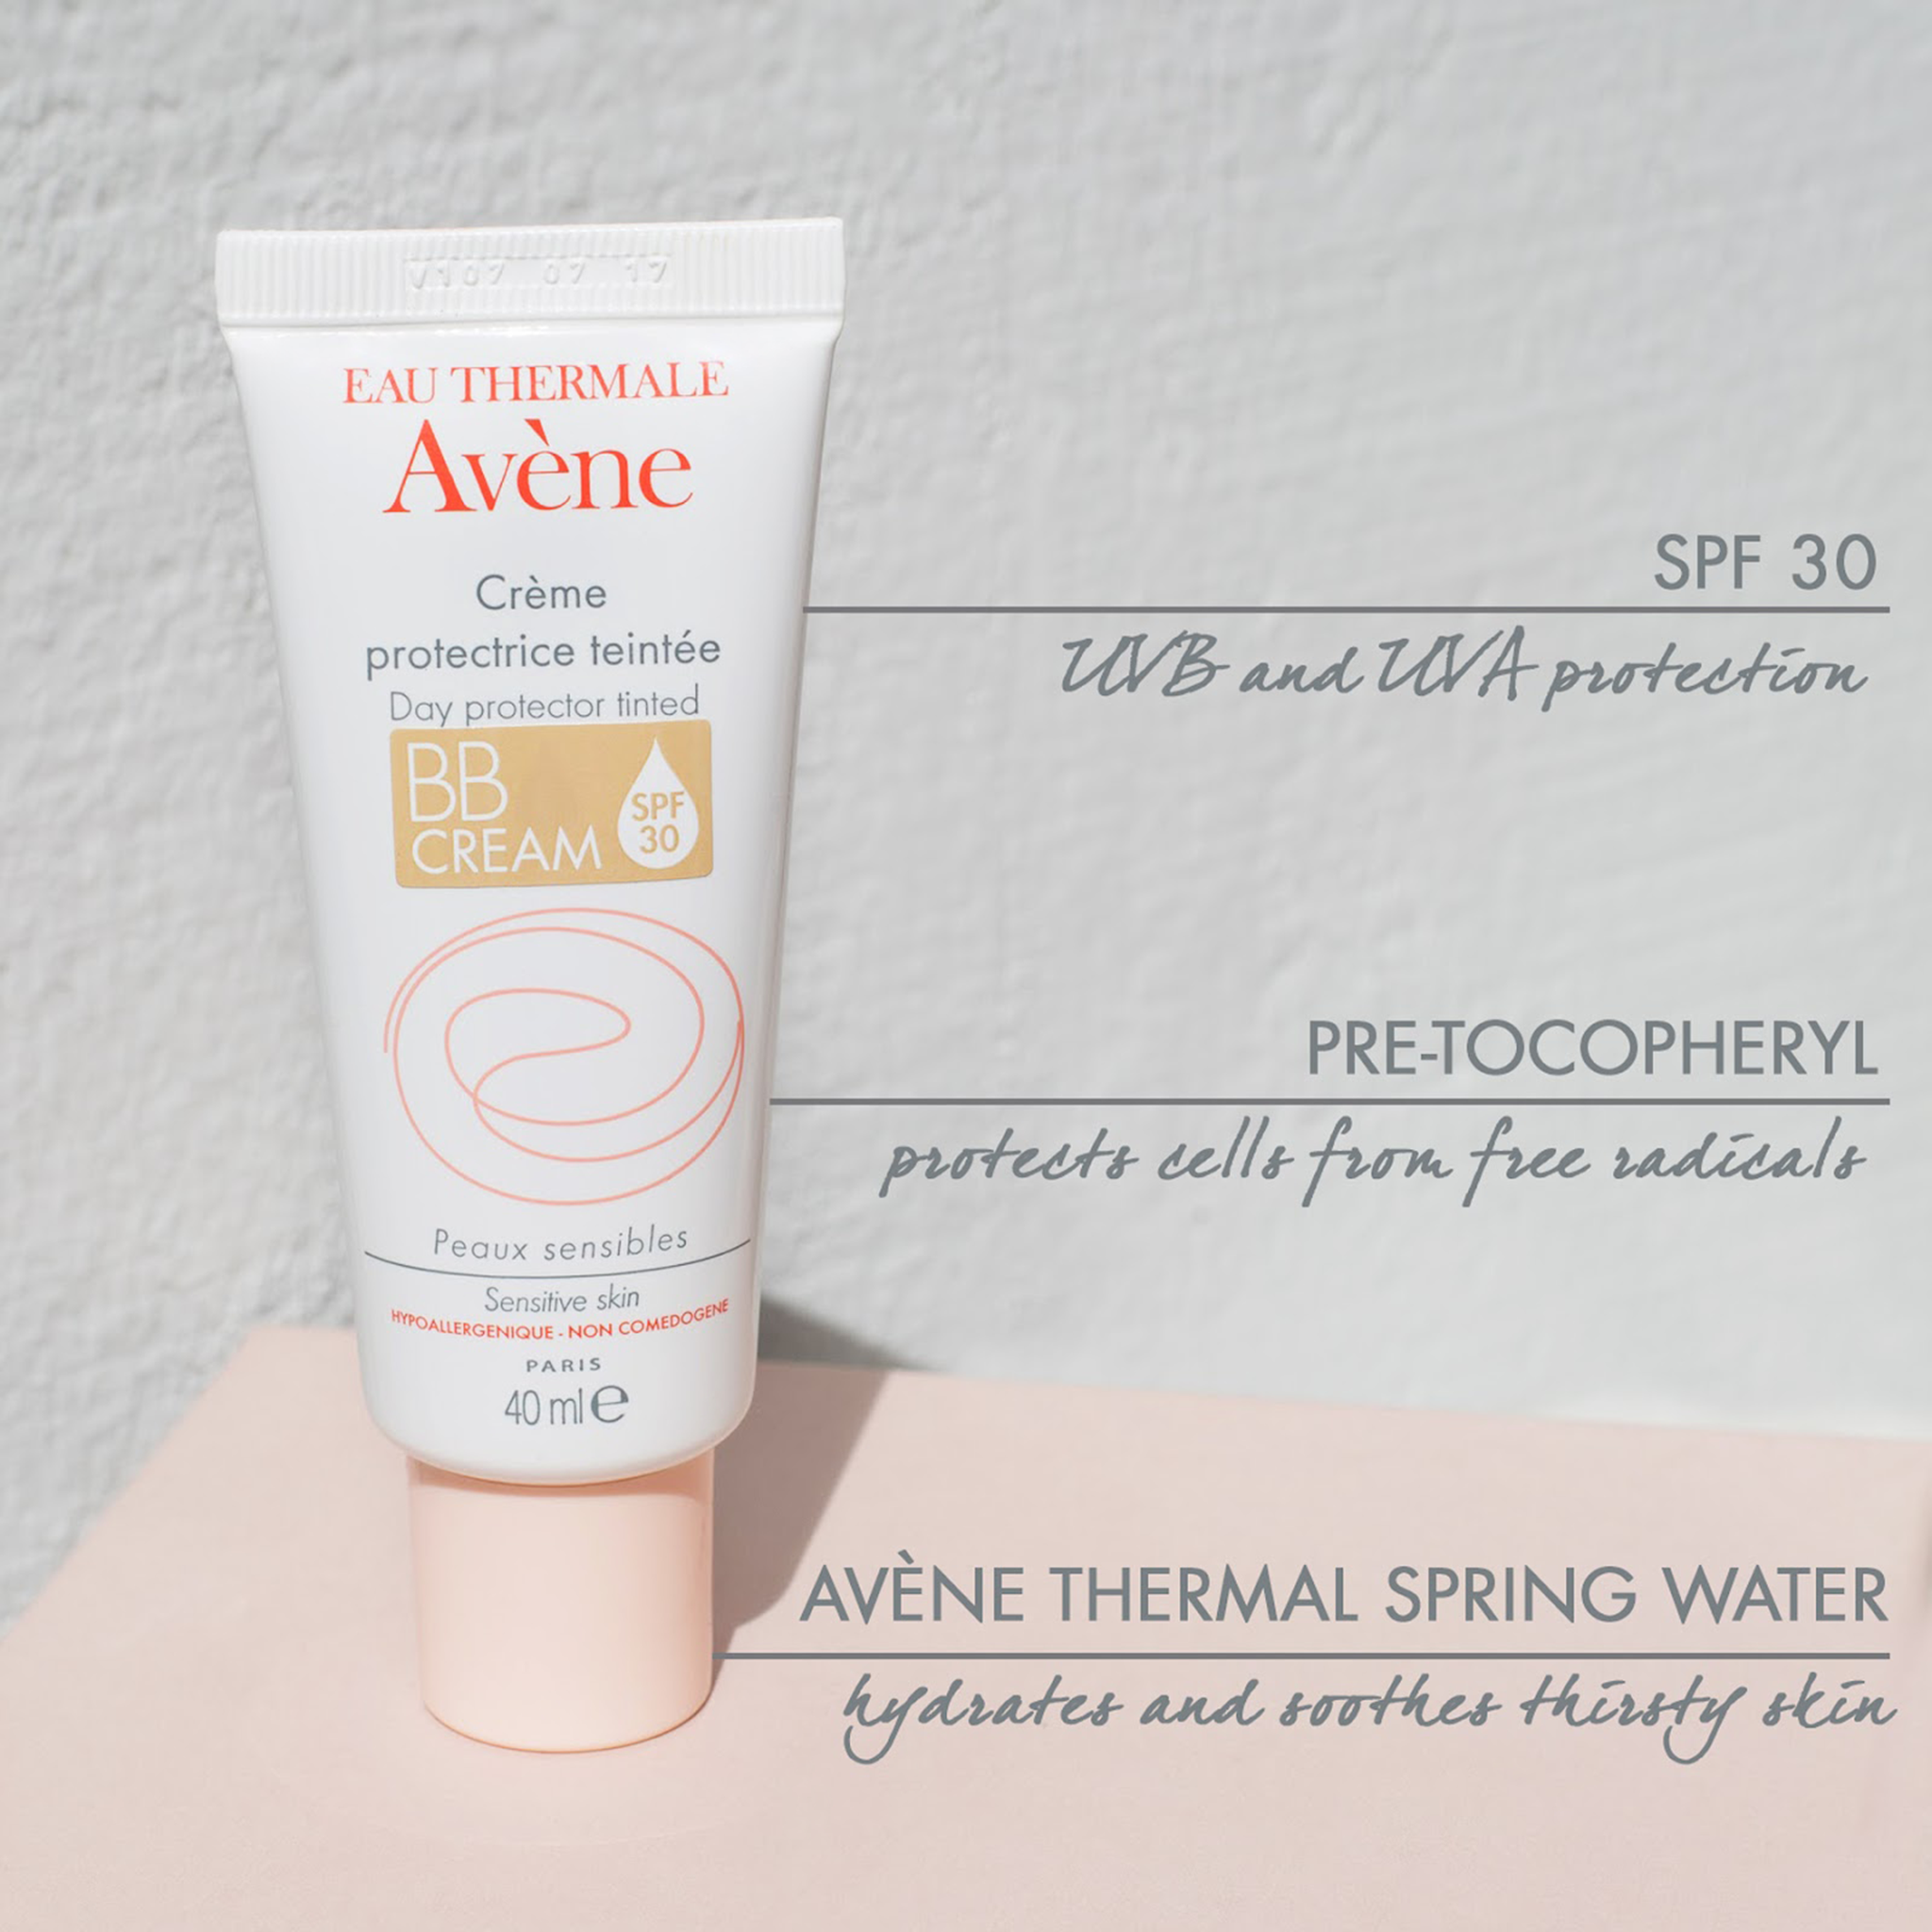 Avène Day Protector Tinted BB Cream SPF30+ 40ml - Tinted Moisturiser for Sensitive Skin